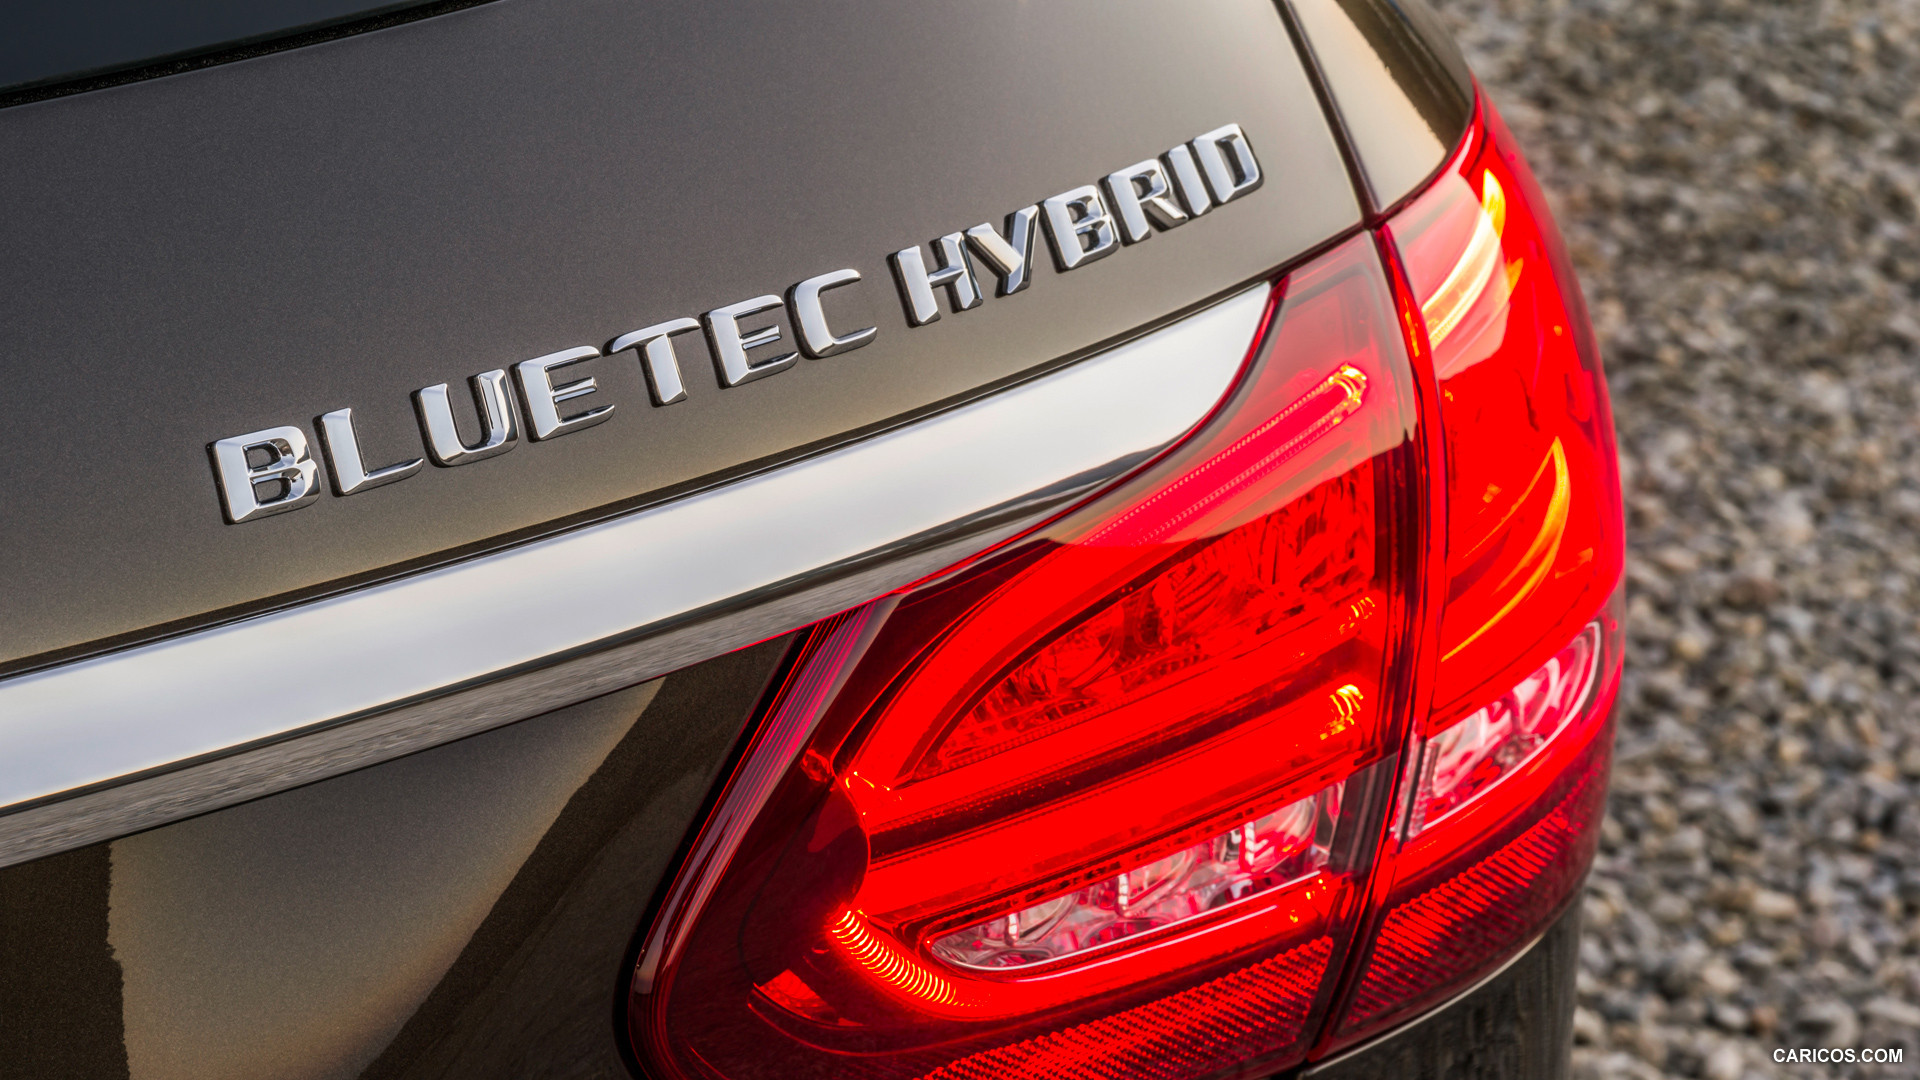 2015 Mercedes-Benz C-Class Estate C300 BlueTEC HYBRID (EXCLUSIV Luxury package) - Tail Light, #77 of 173